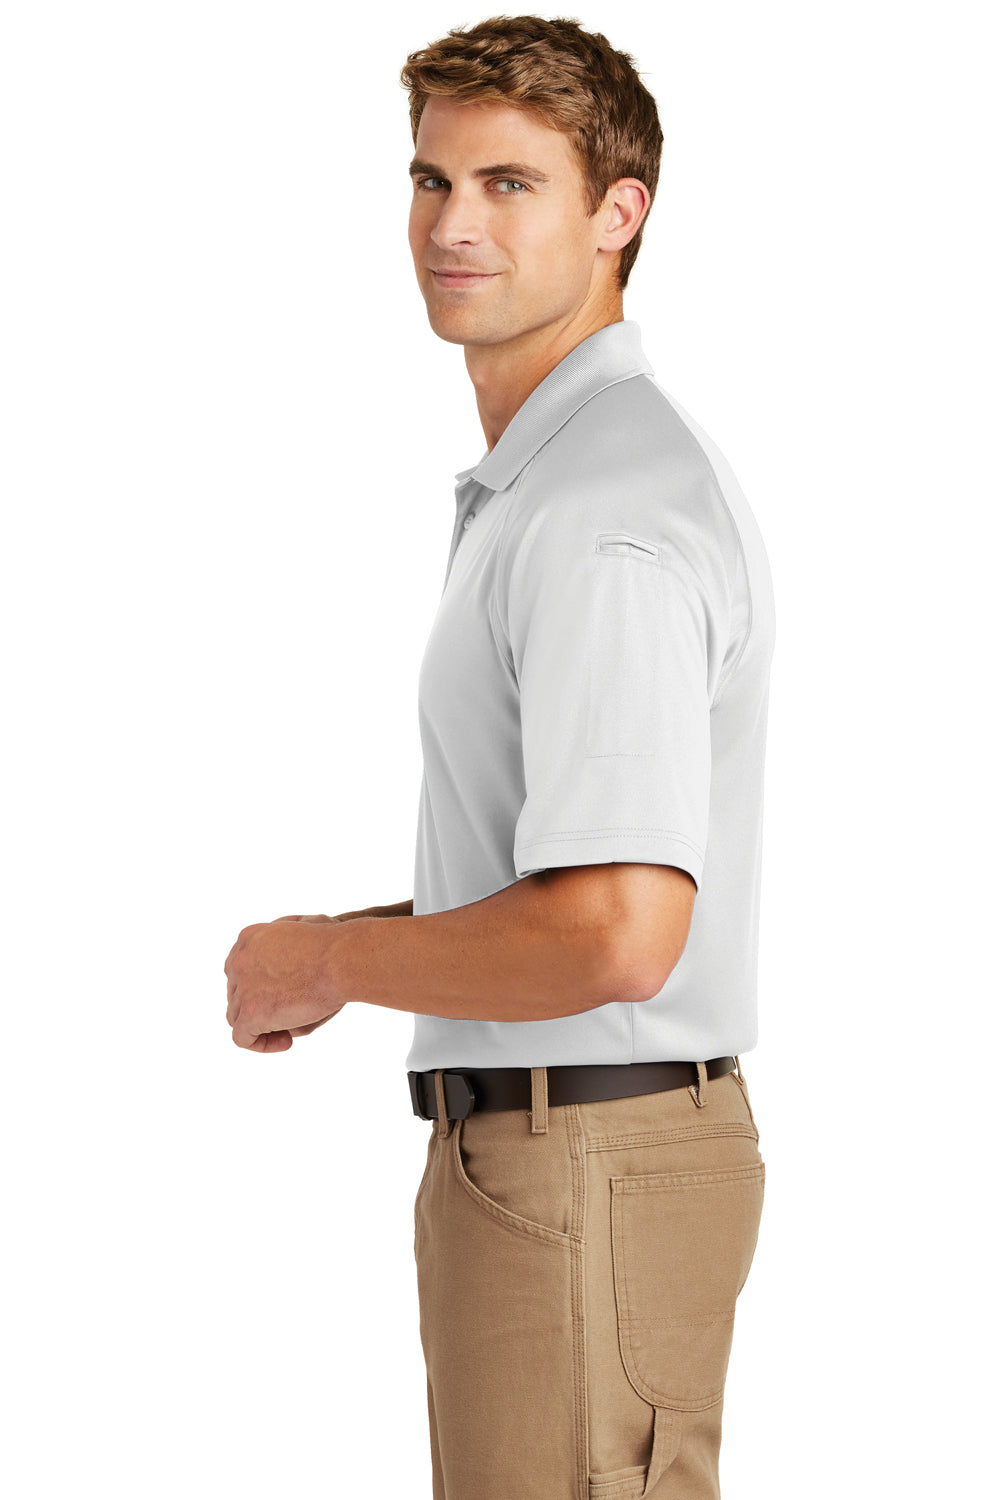 CornerStone CS410 Mens Select Tactical Moisture Wicking Short Sleeve Polo Shirt White Side